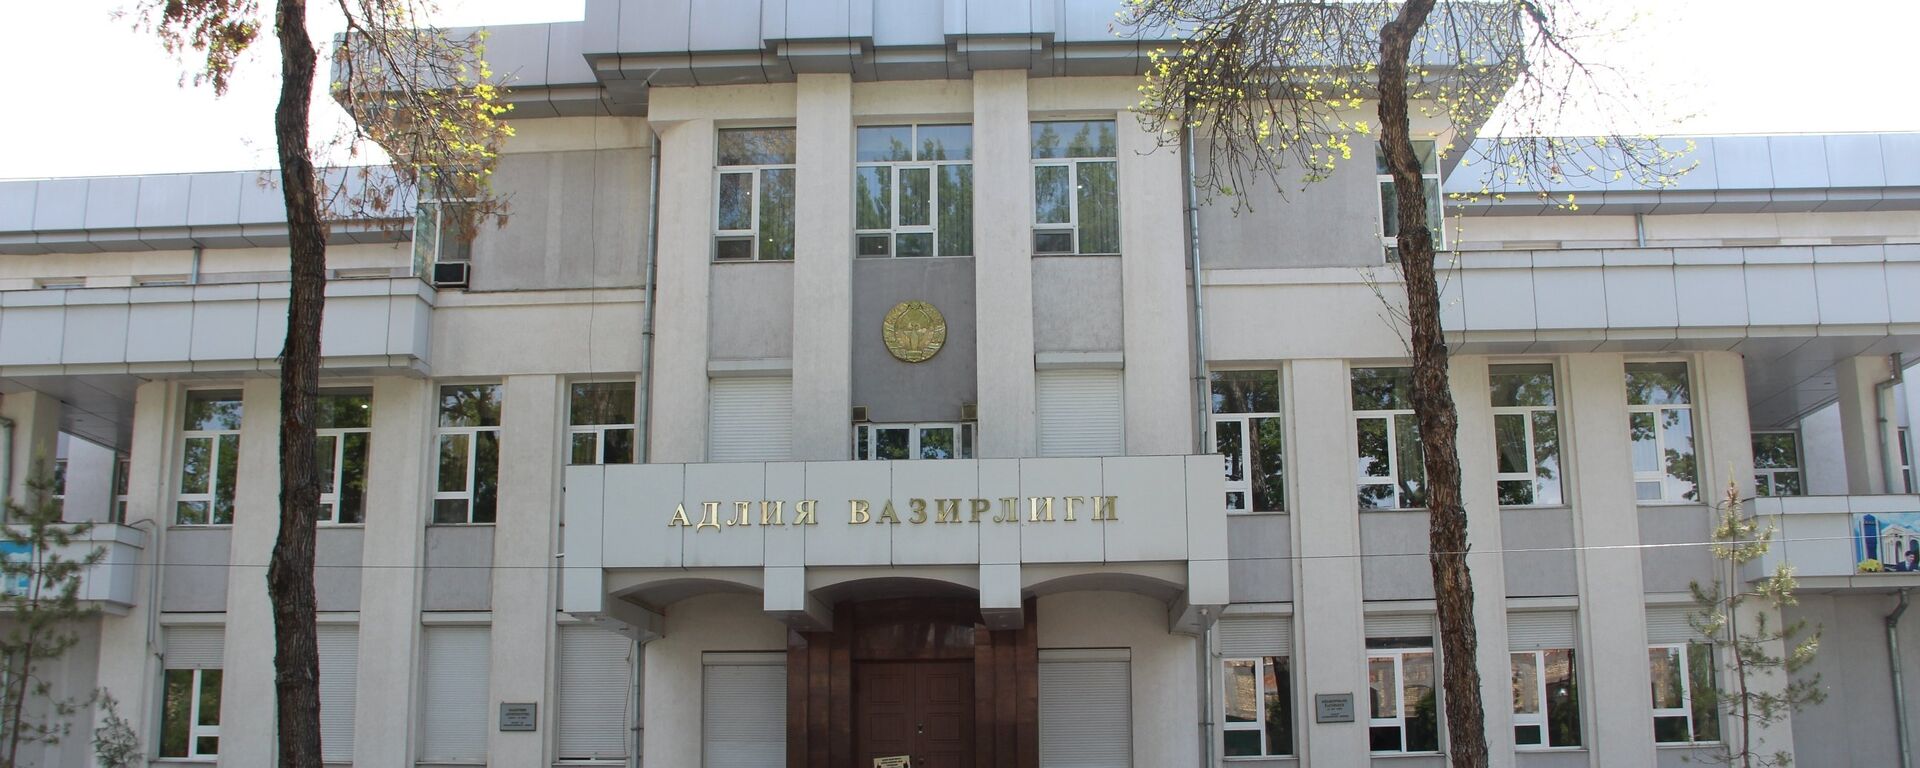 Здание Министерства юстиции Узбекистана - Sputnik Узбекистан, 1920, 22.05.2021